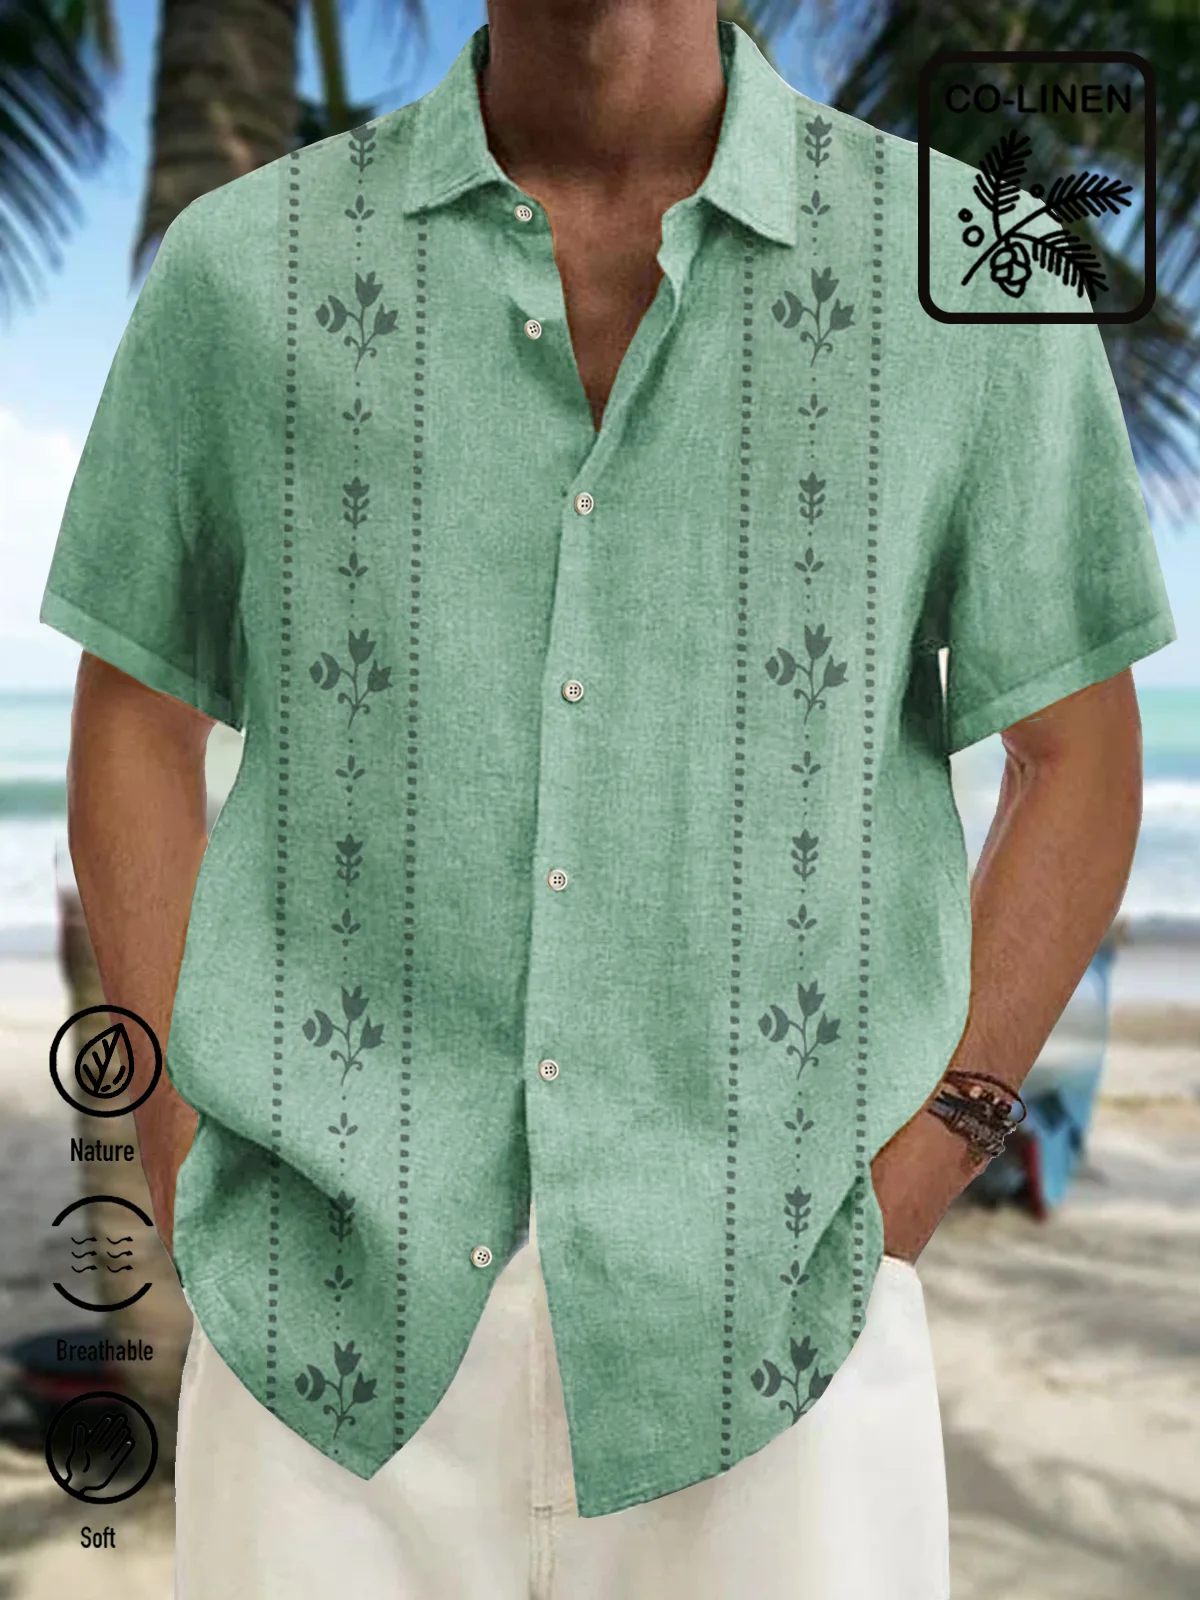 Royaura Beach Holiday Casual Men's Natural Fiber Blend Guayabera Shirts Oversized Aloha Shirts